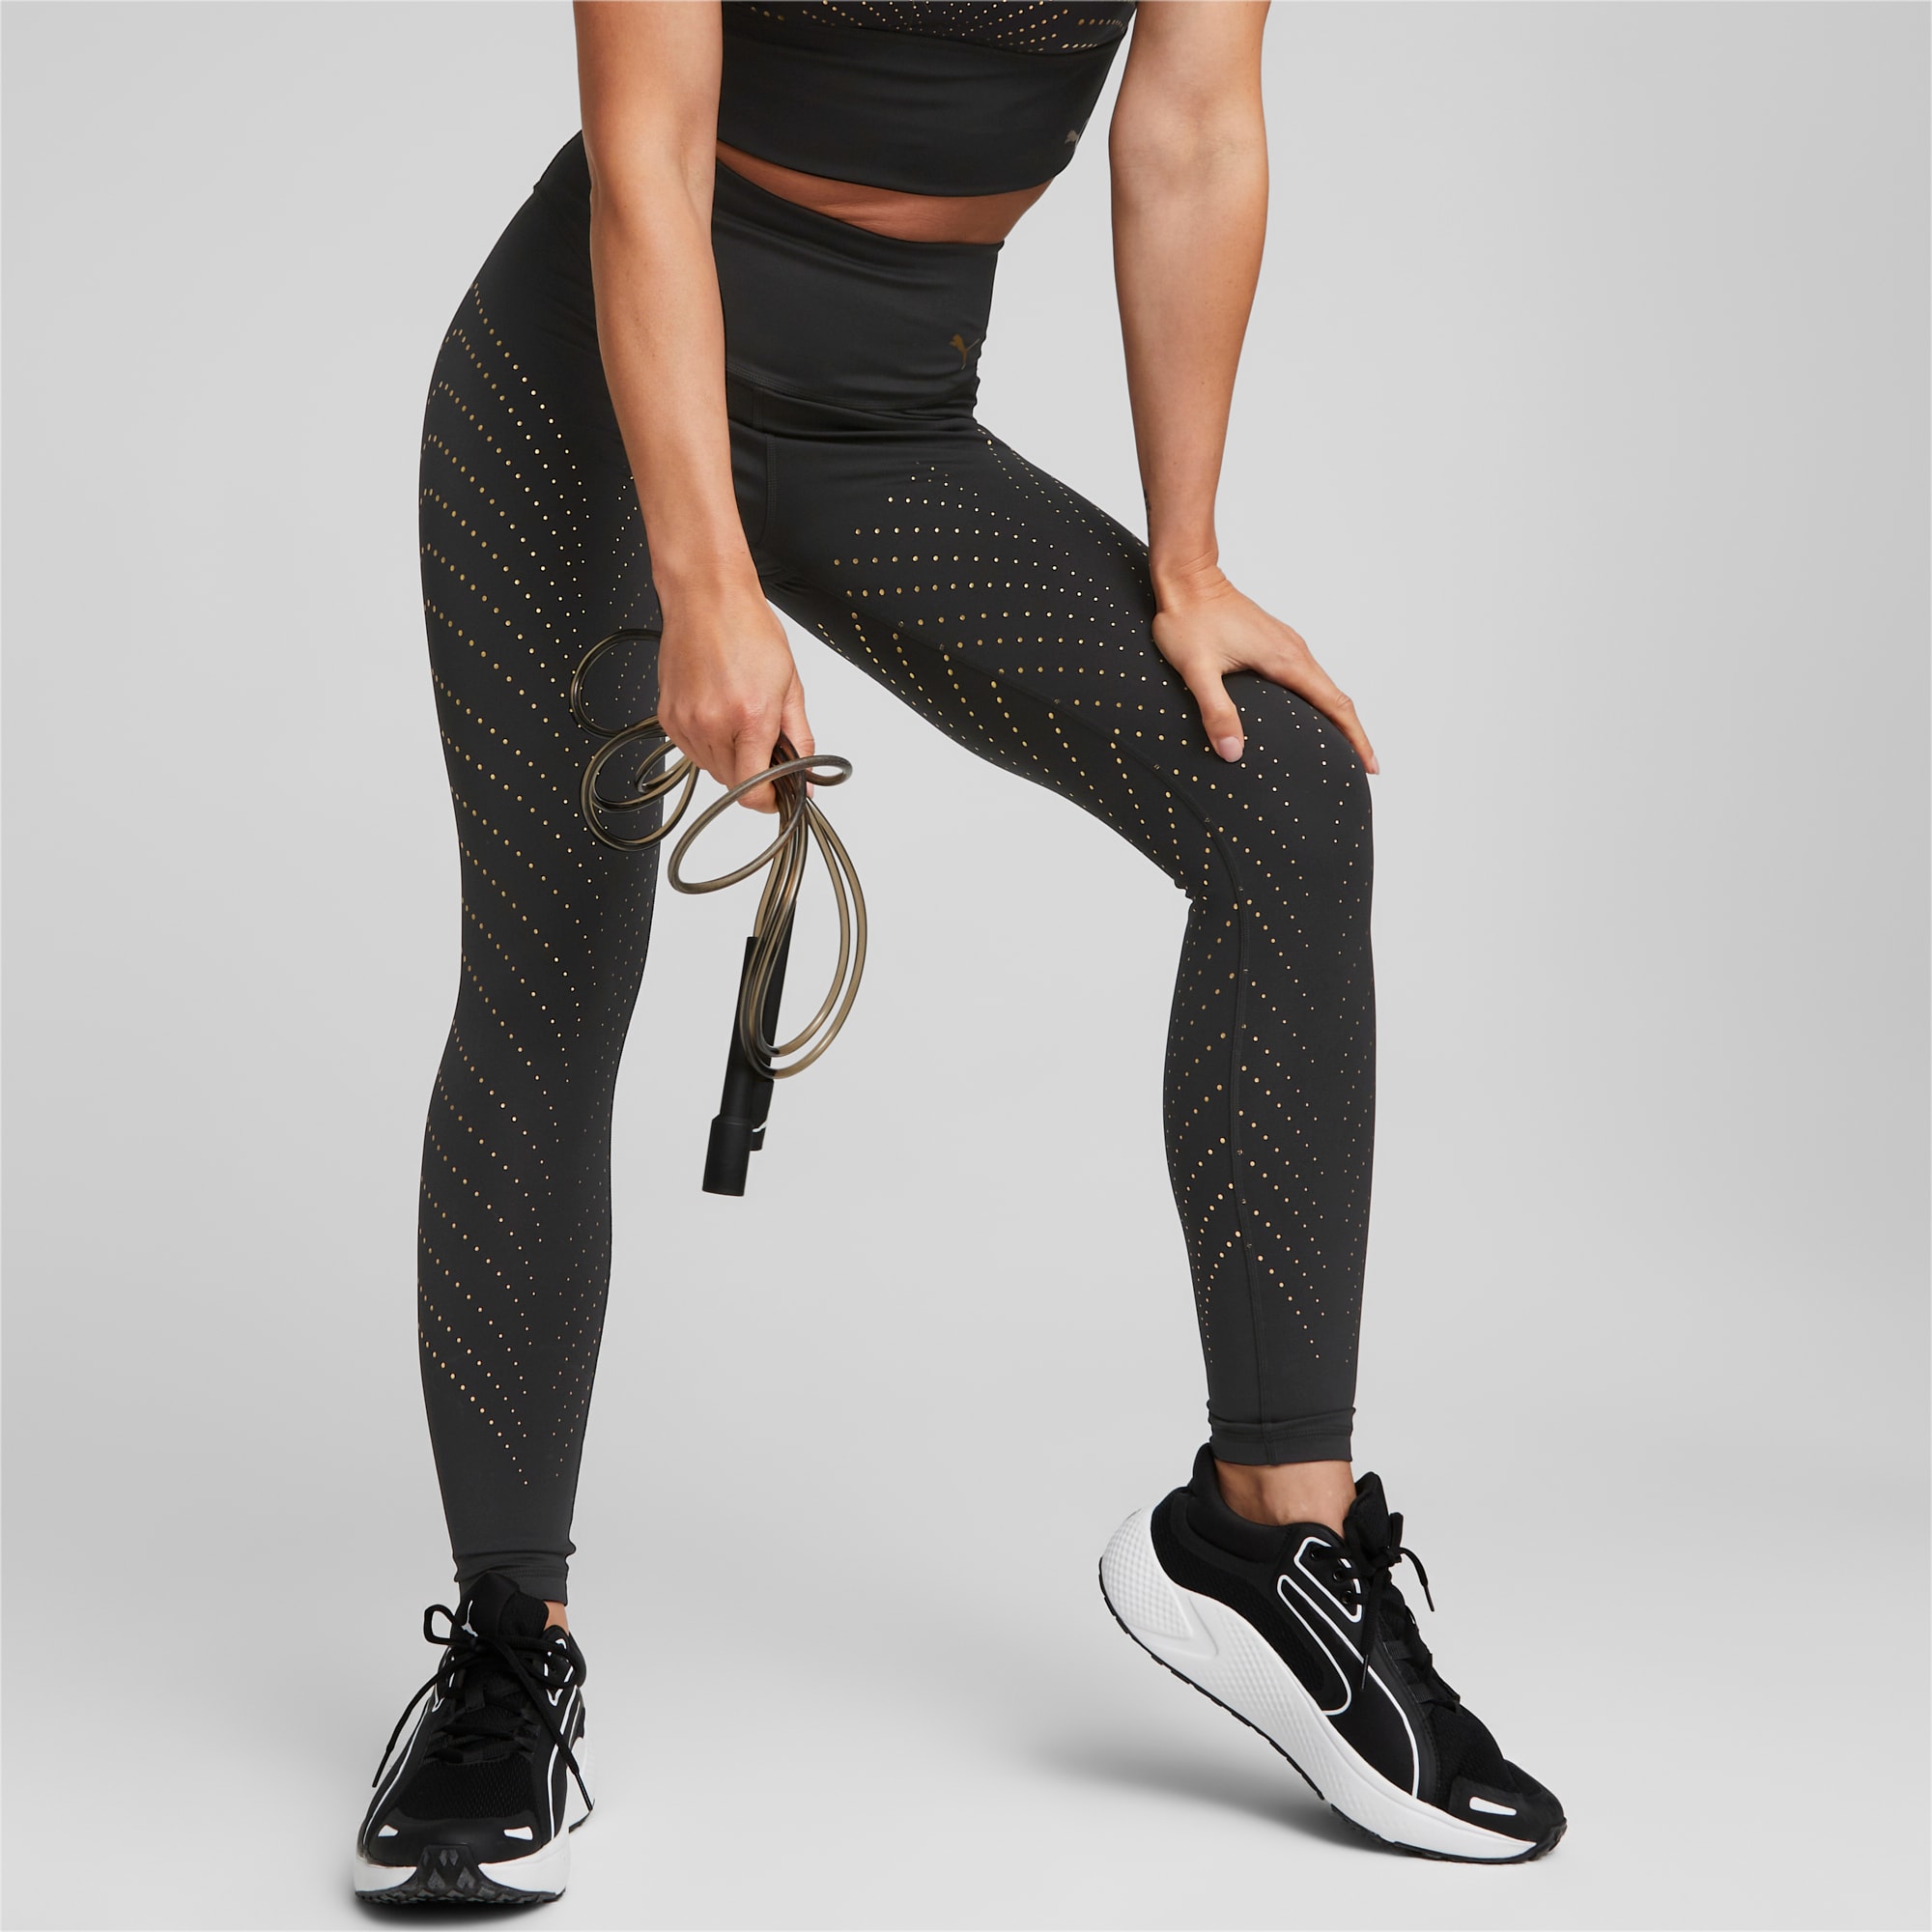 Puma Women's Moto Tight Black Gold Leggings Workout Active Wear